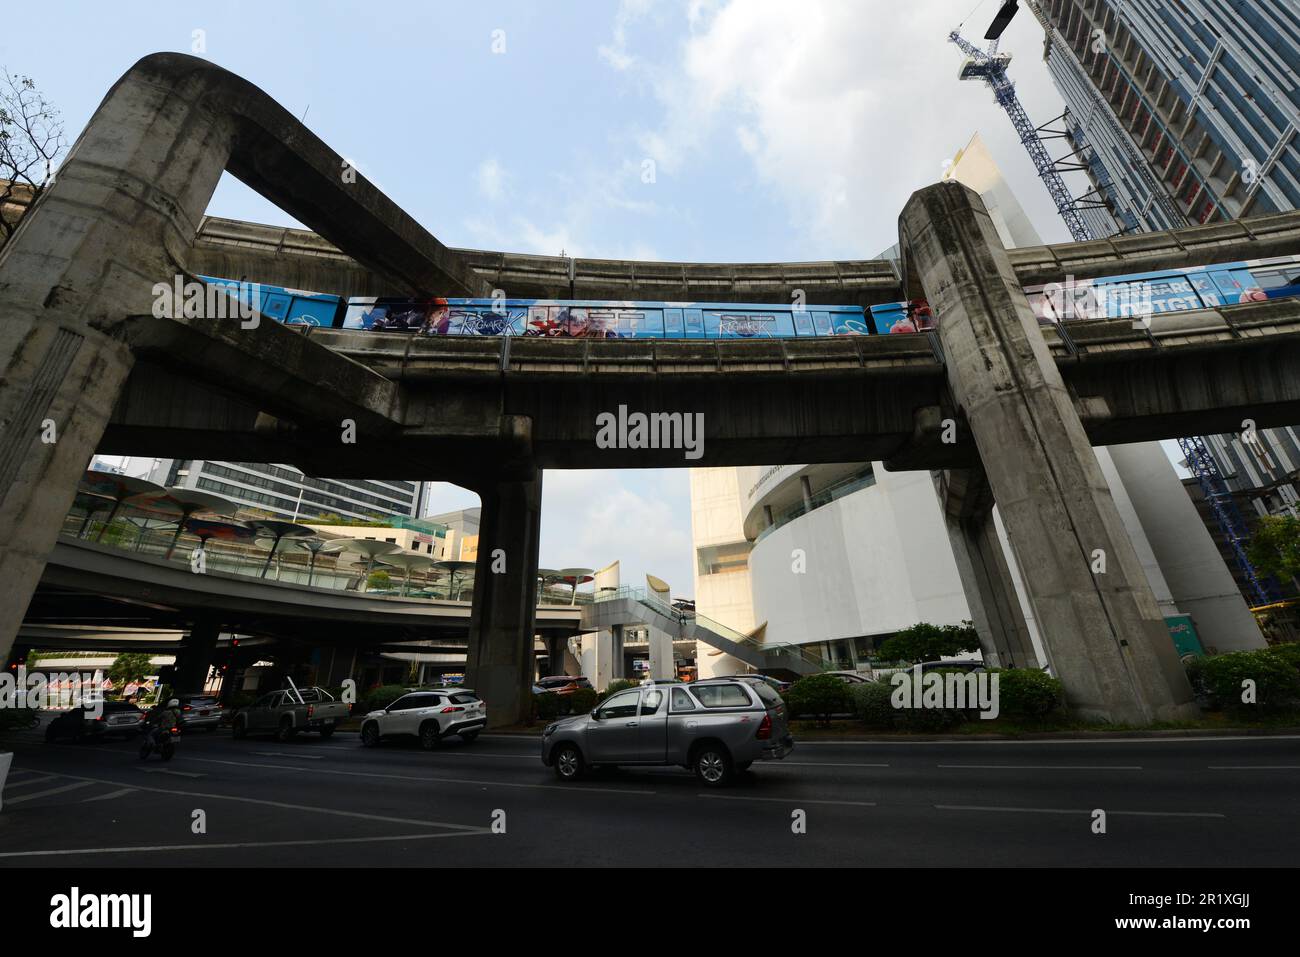 The BTS Skytrain near Siam Square on Phaya Thai Road in central Bangkok, Thailand. Stock Photo